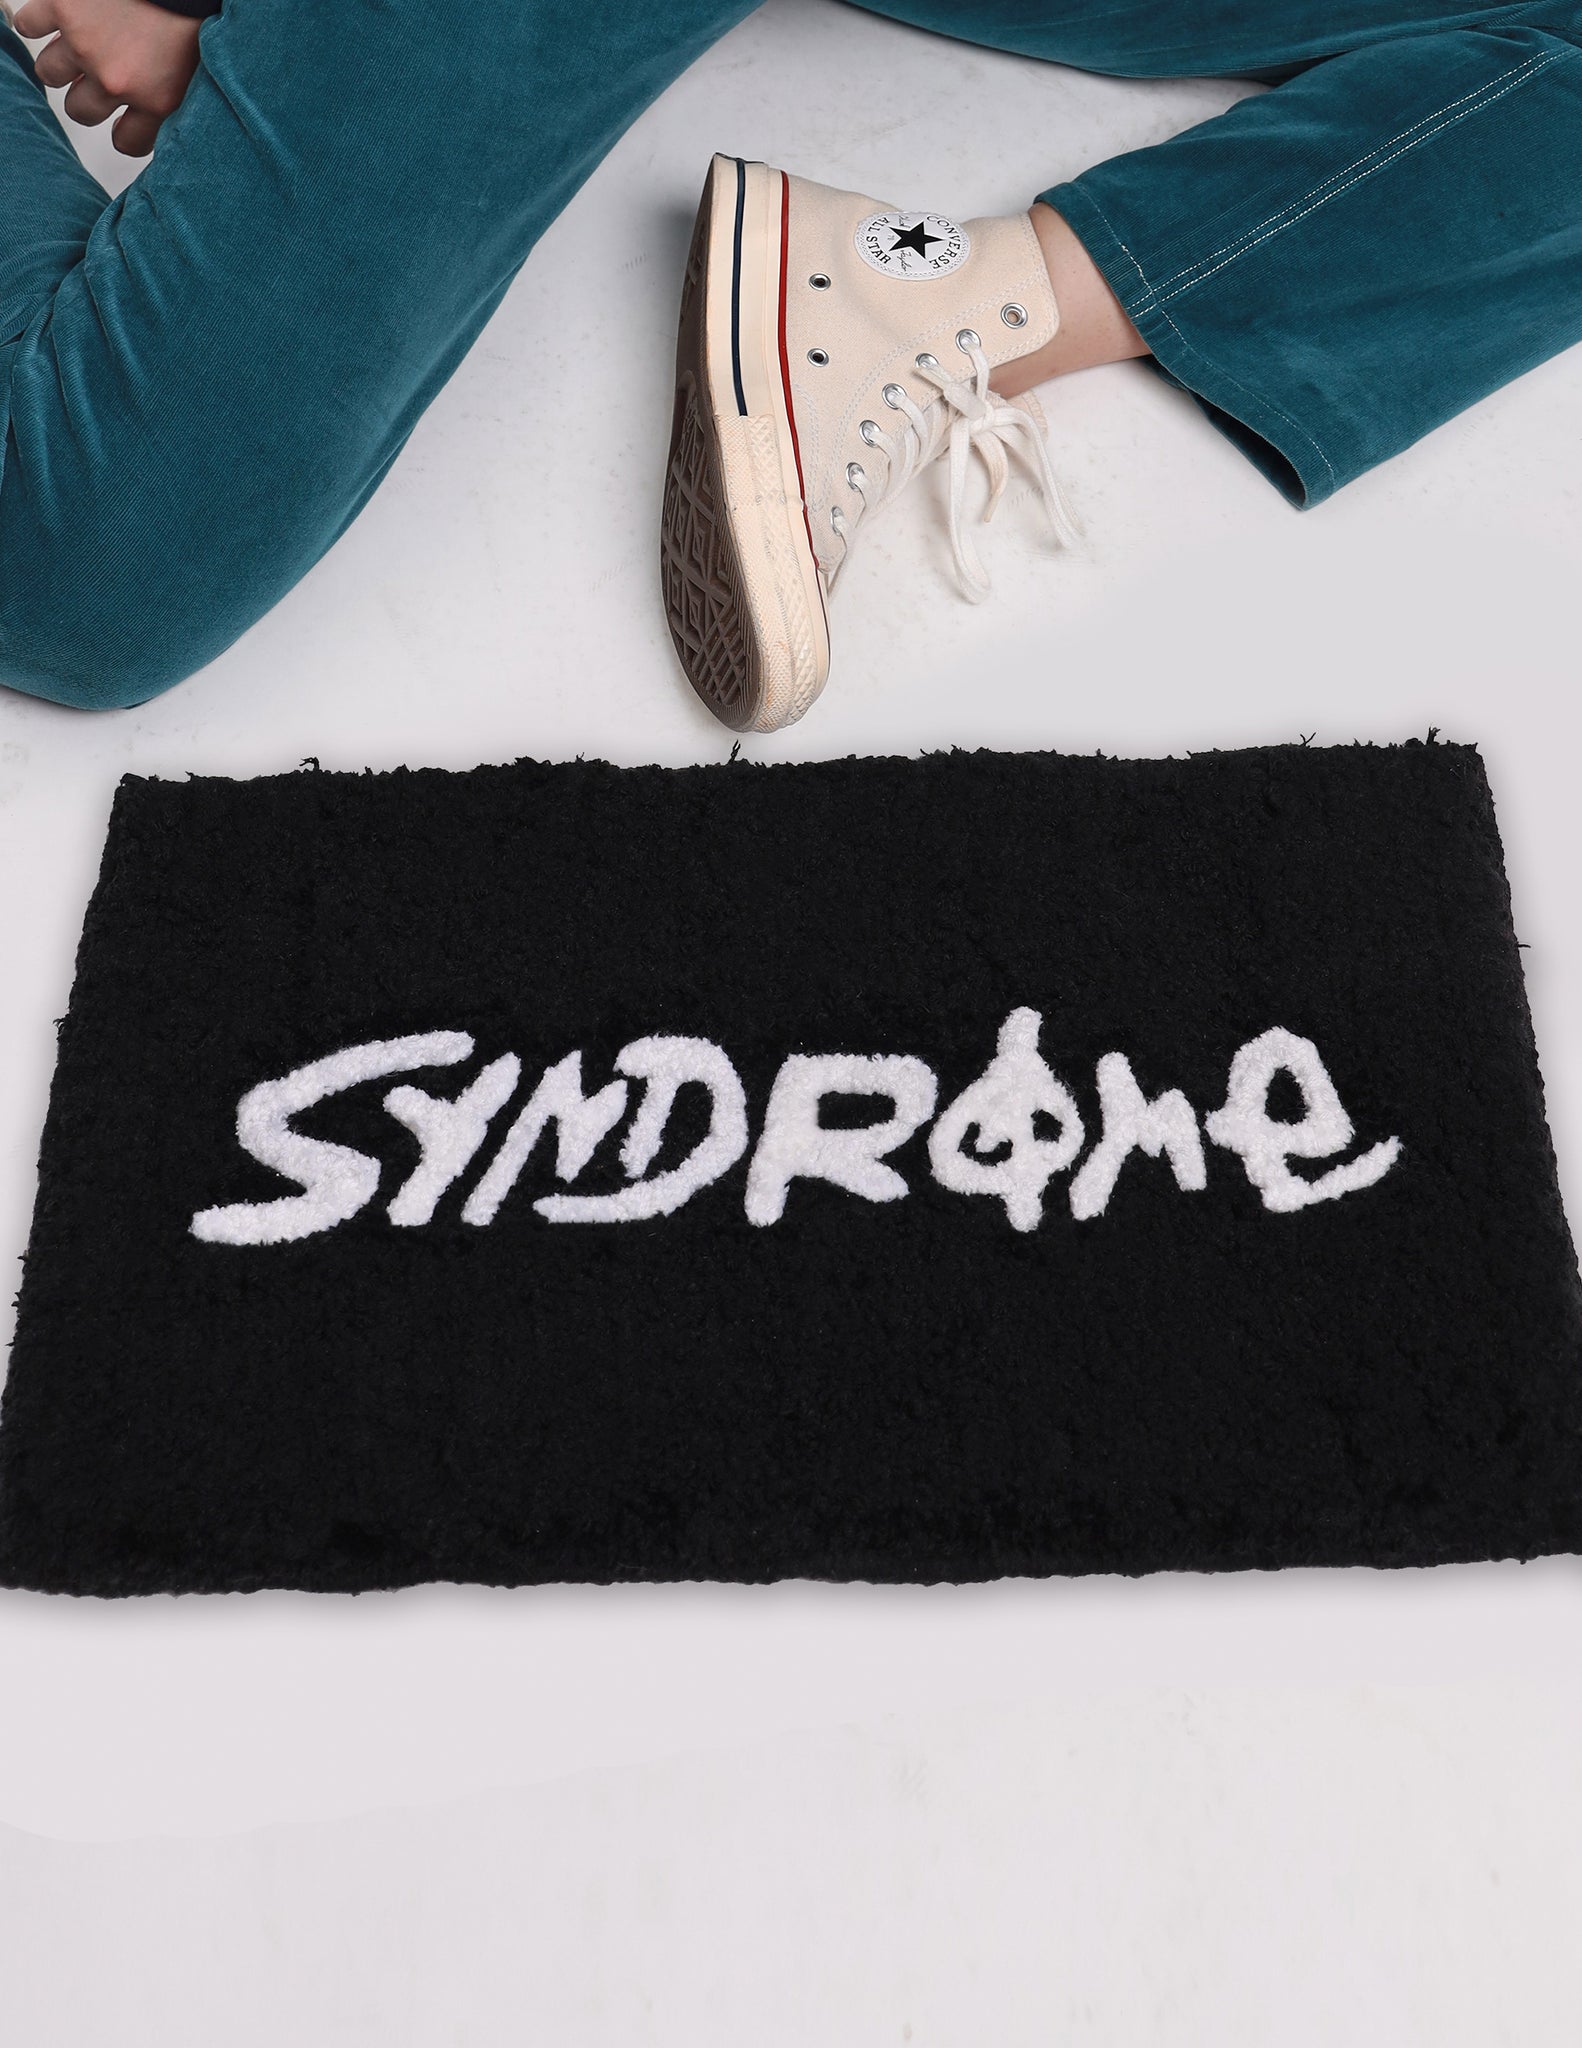 Syndrome Doormat